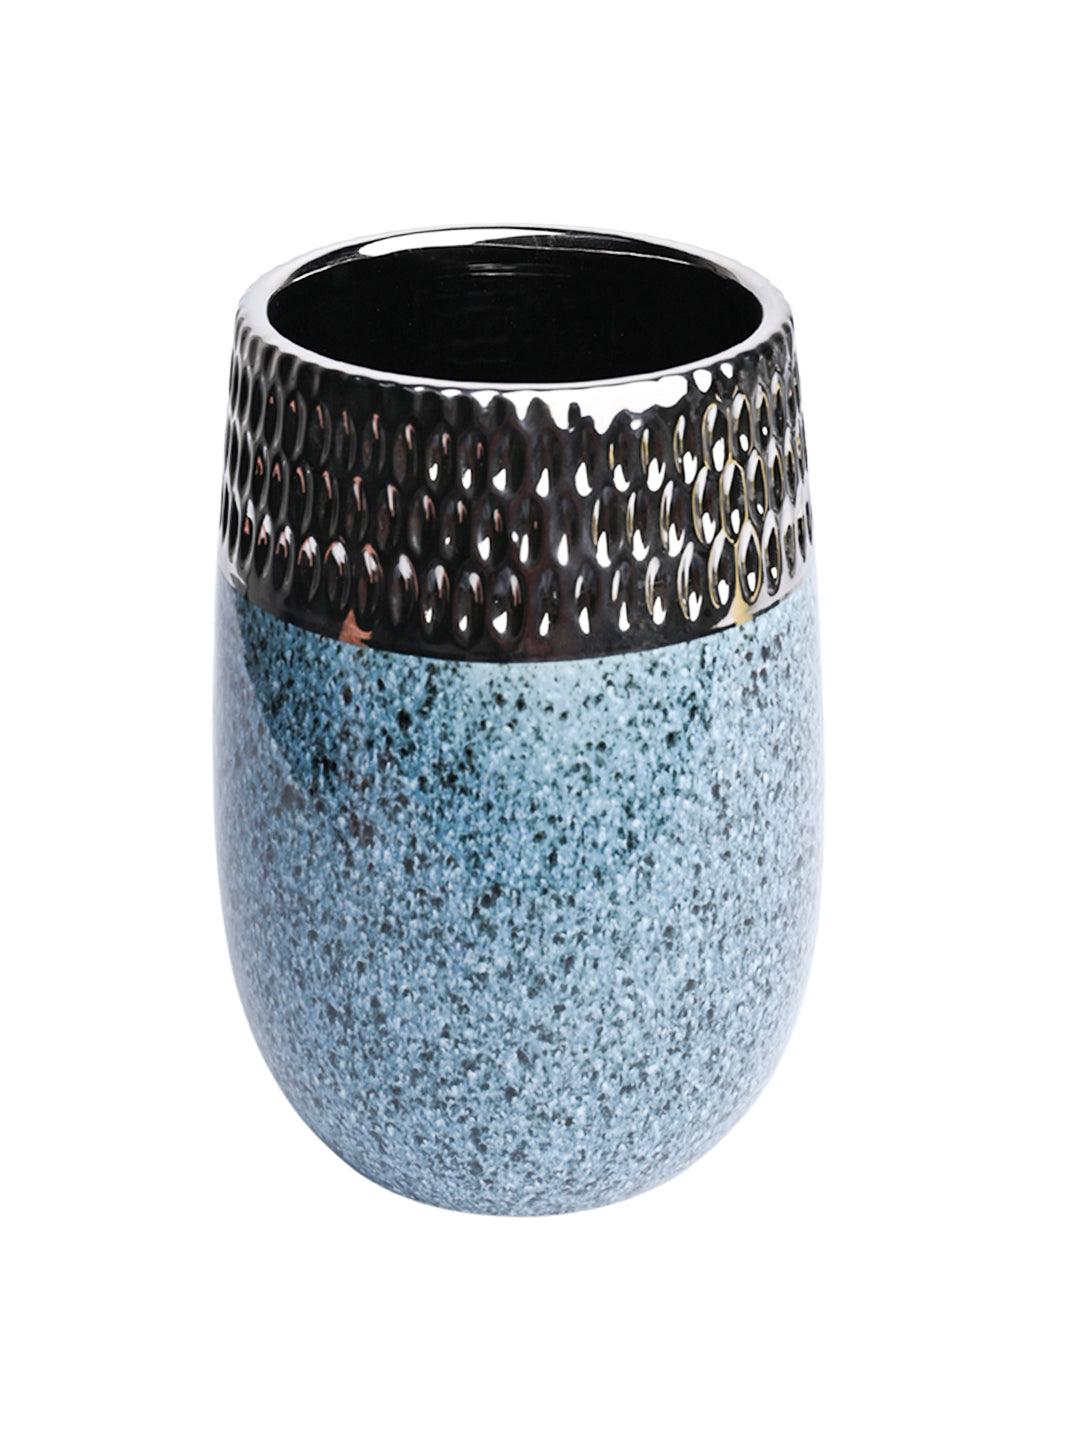 Golden Edge + Ceramic Vase - MARKET99